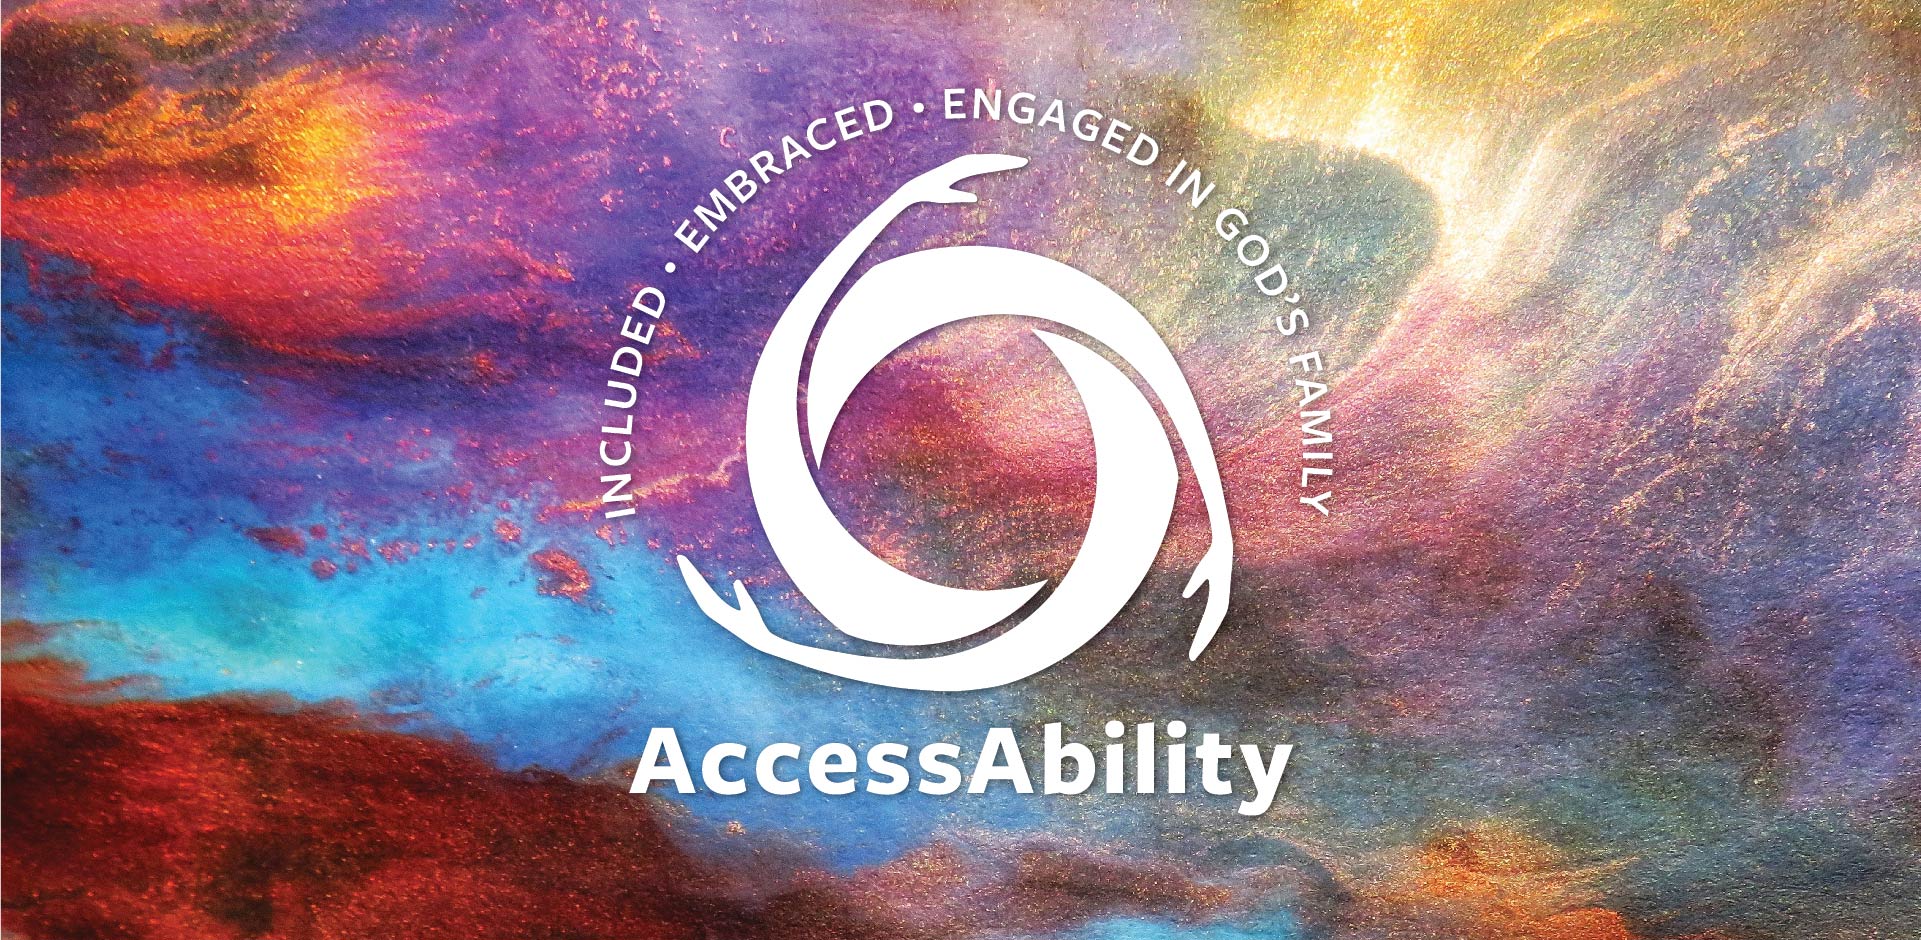 accessability_1920x940_website